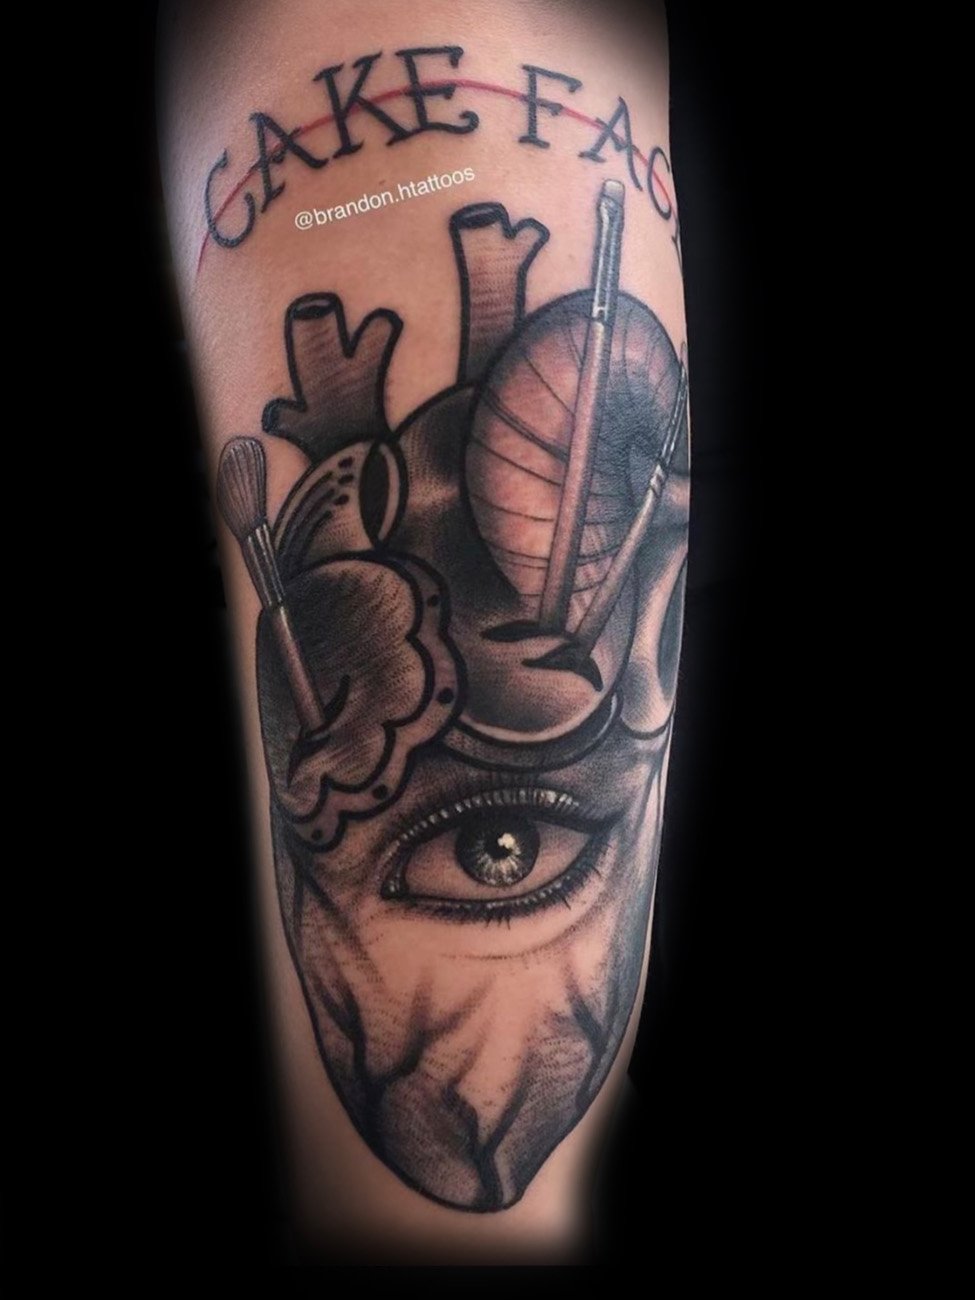 Brandon Hammons H&H Nashville tattoo artist Hart